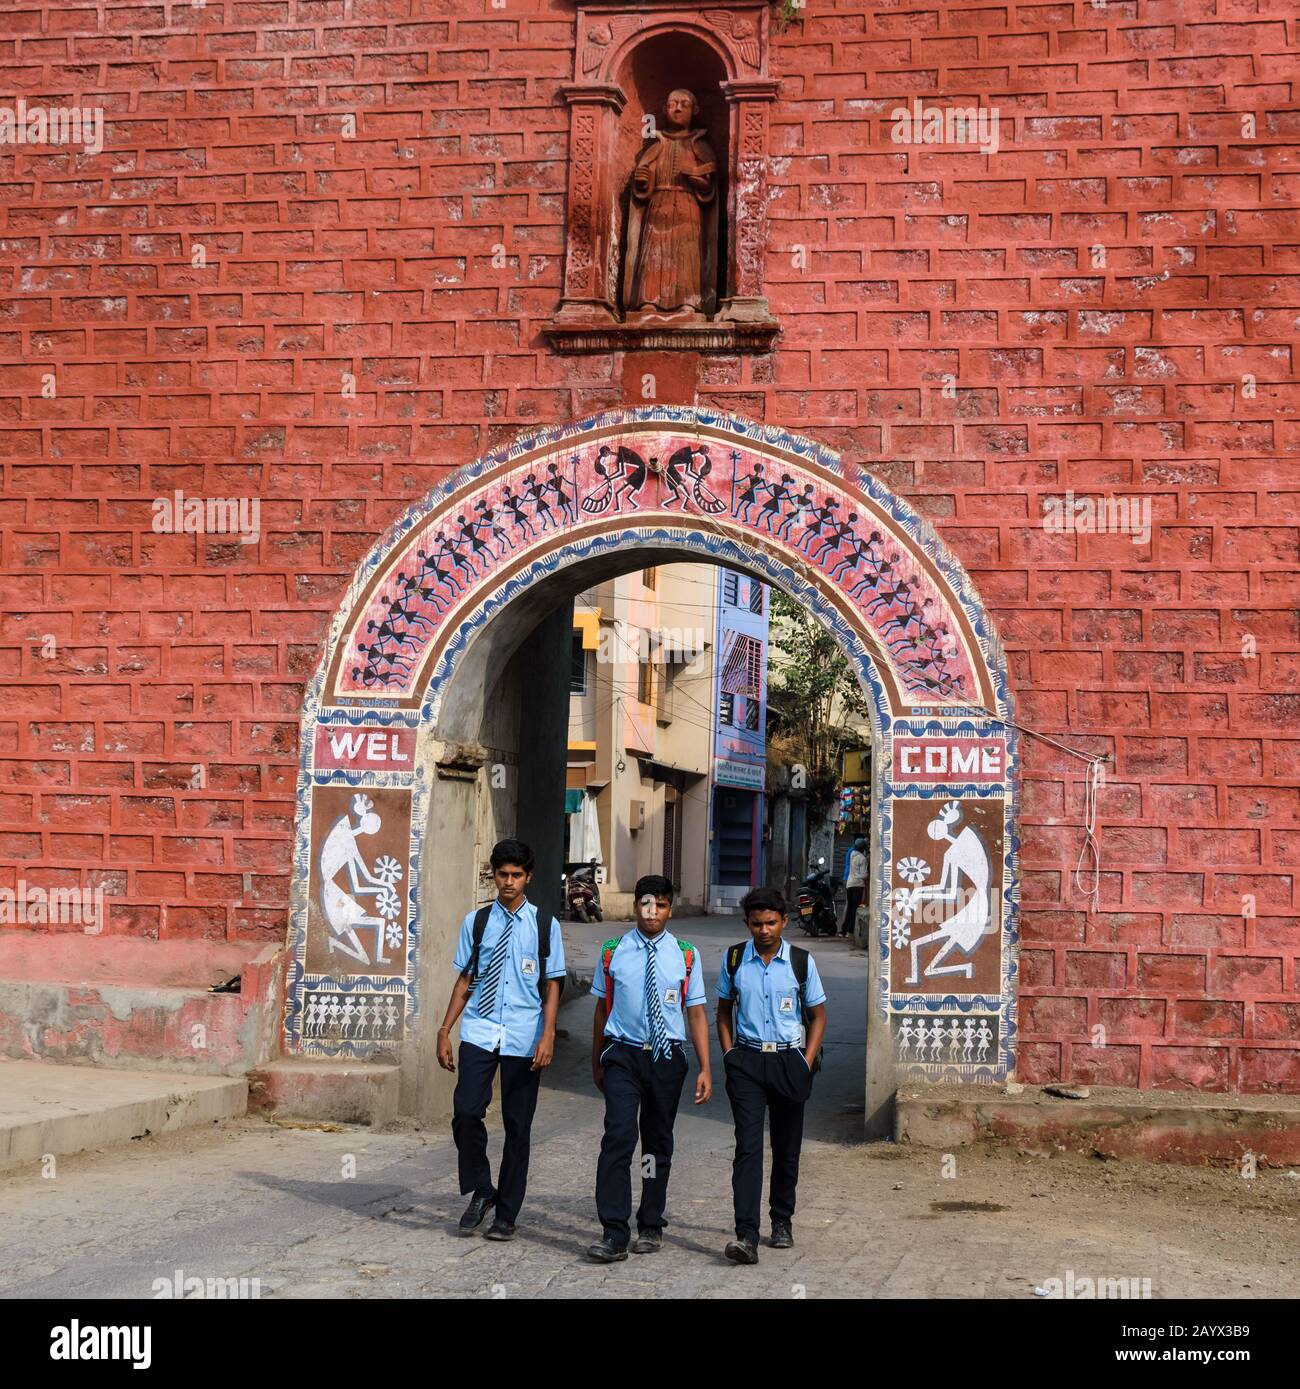 Three boys in school uniform walk on the road thatgoes through the old, red, Portuguese Zampa gateway in Diu Island. Stock Photo